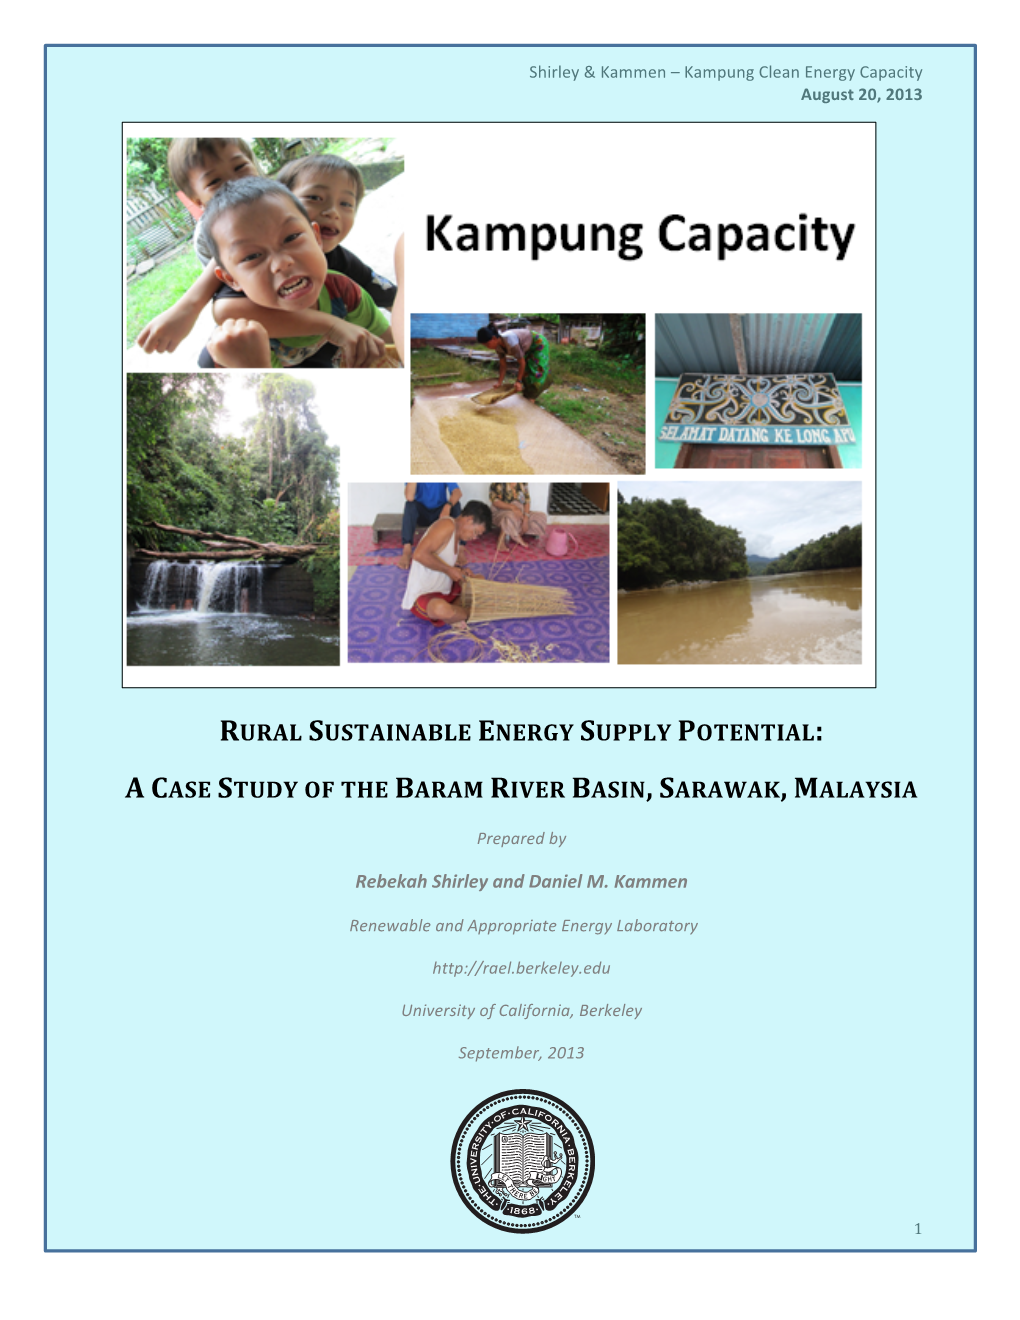 A Case Study of the Baram River Basin, Sarawak, Malaysia